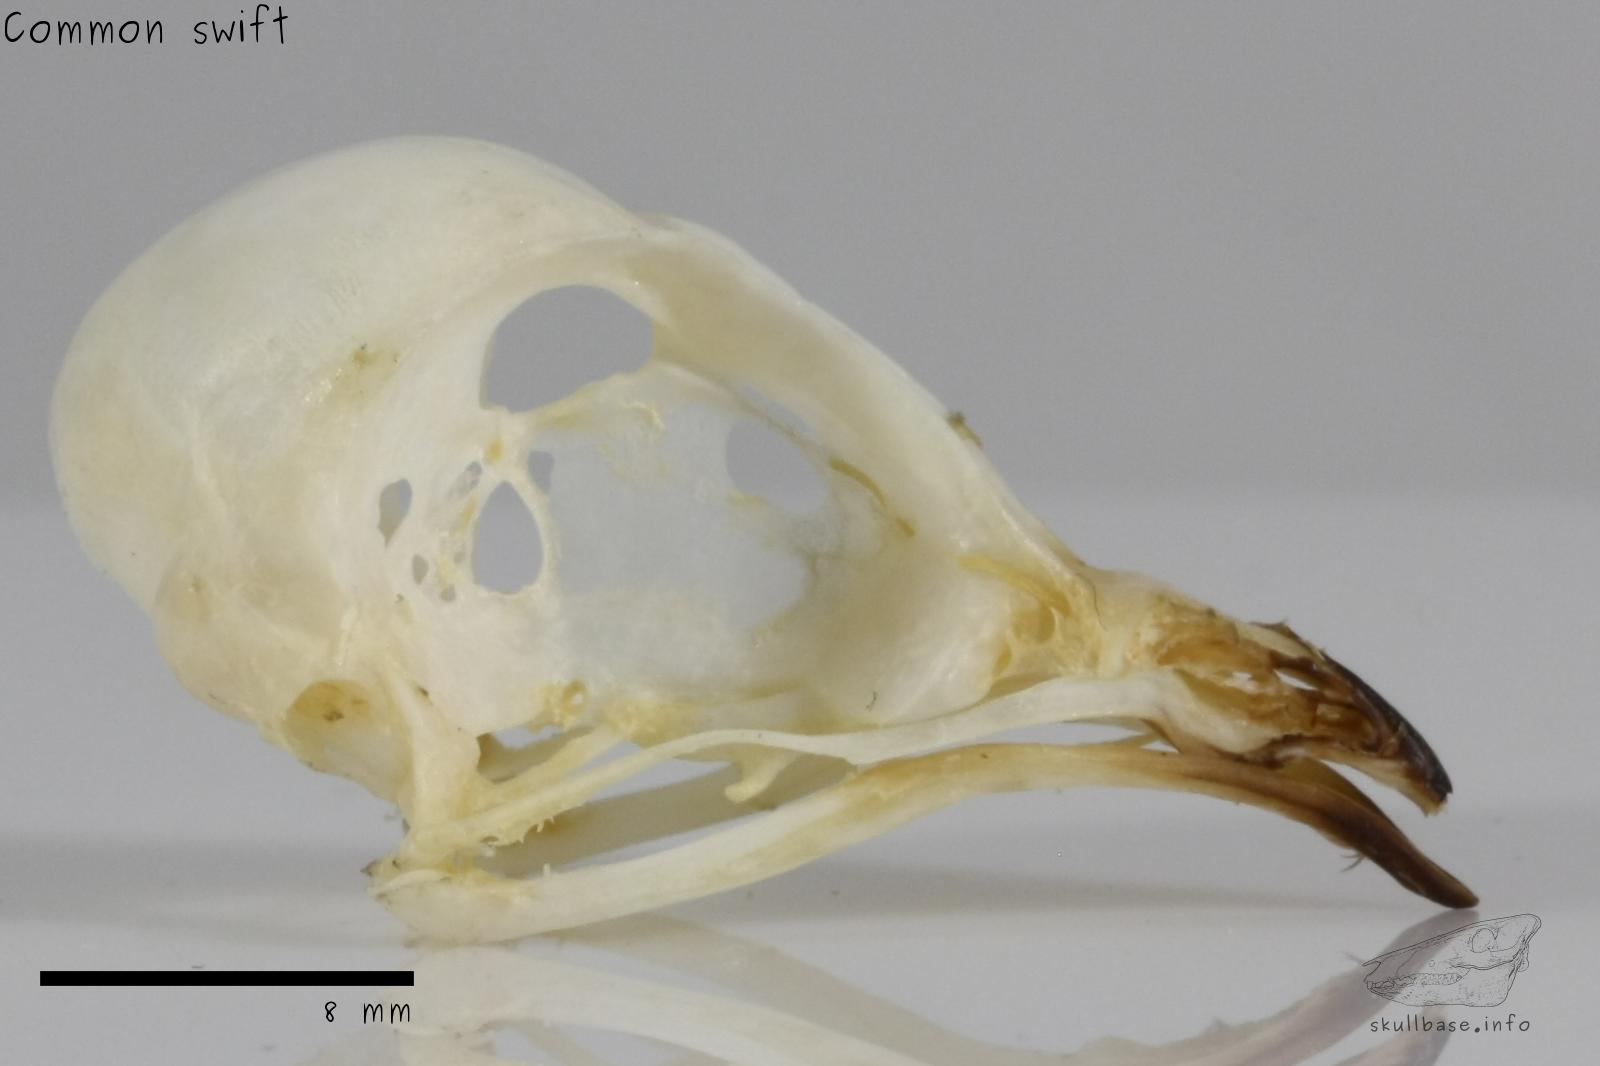 Common swift (Apus apus) skull lateral view